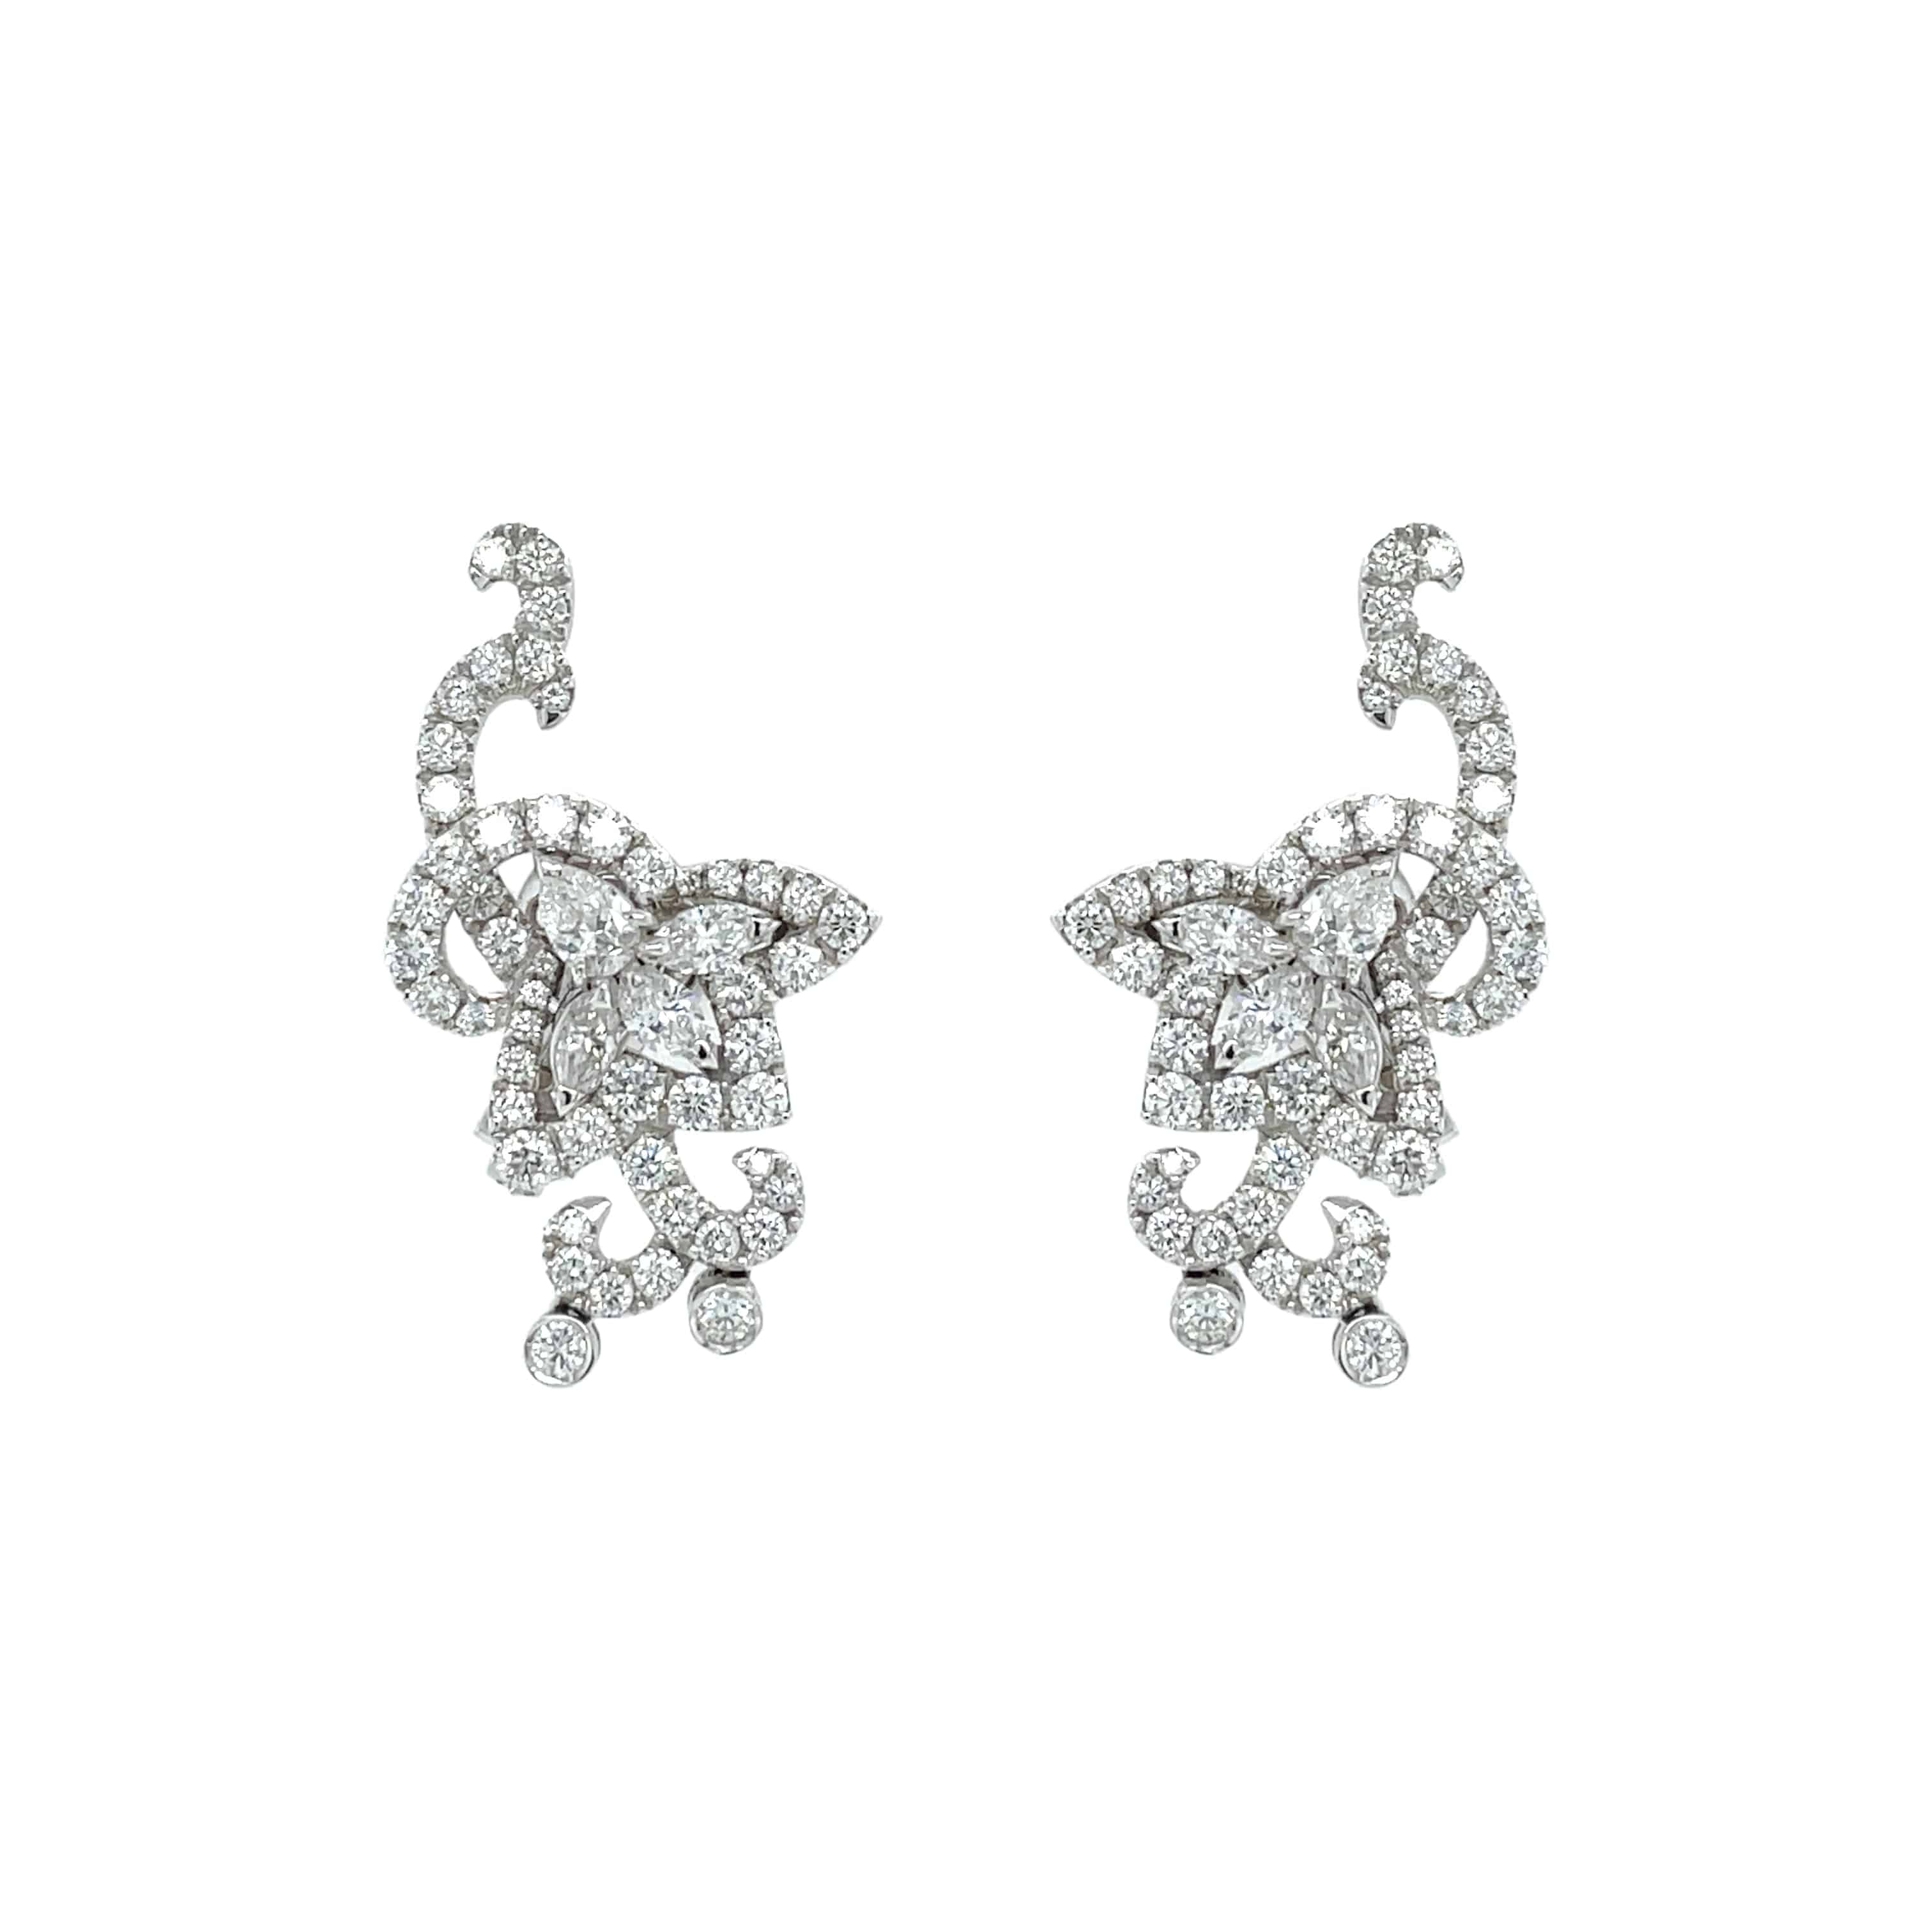 Floral Shaped Diamond Earrings